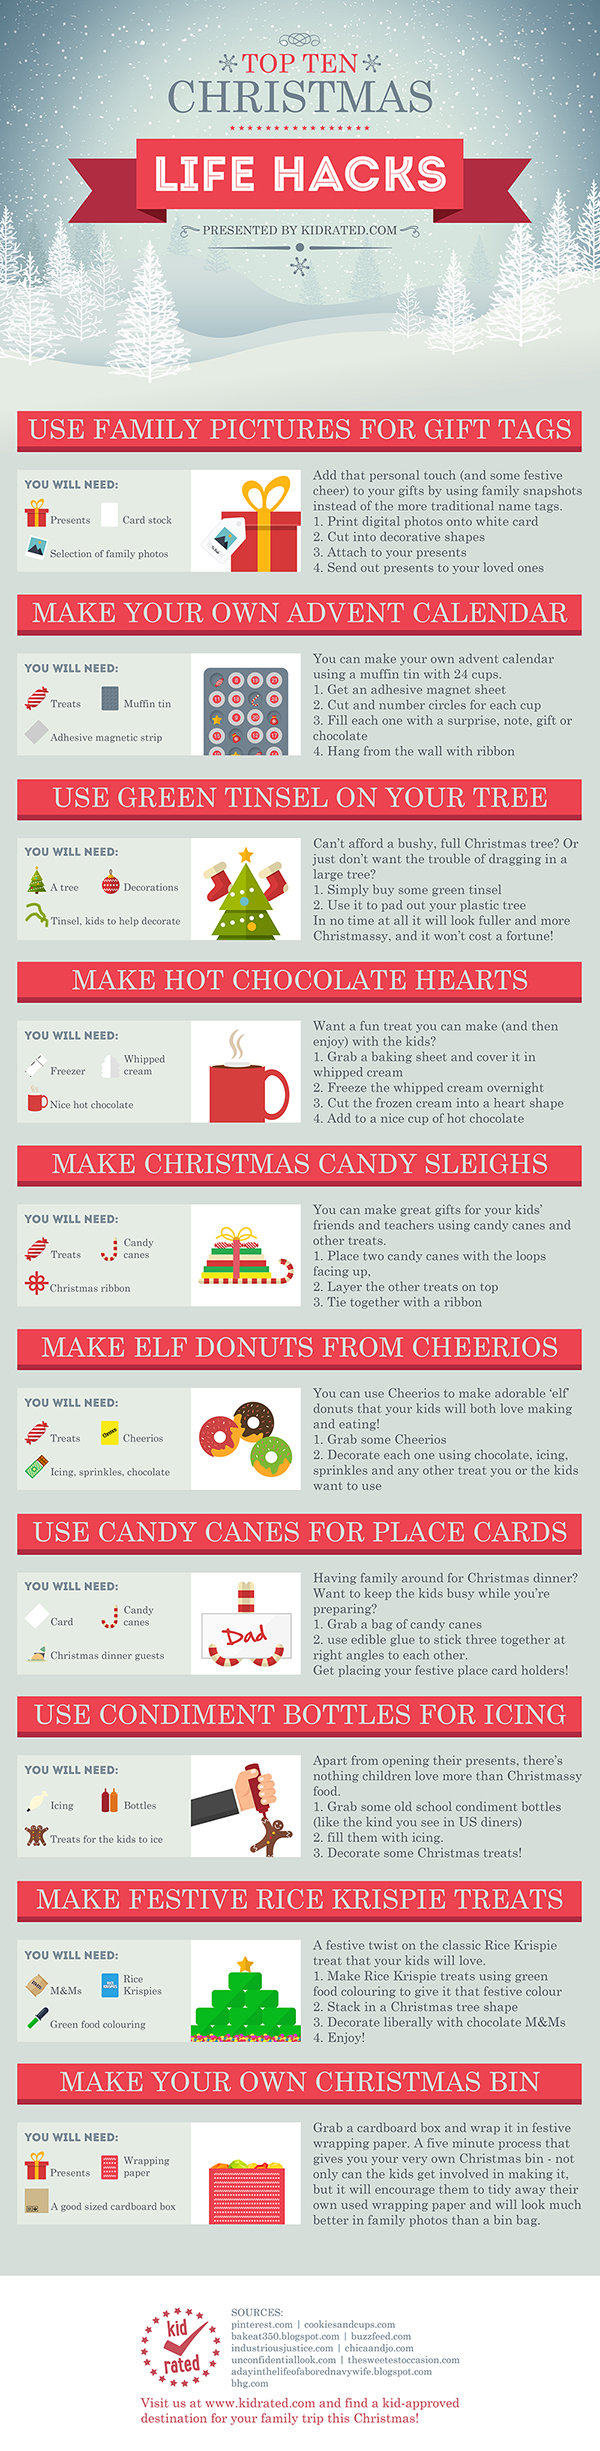 Top Ten Christmas Life Hacks infographic